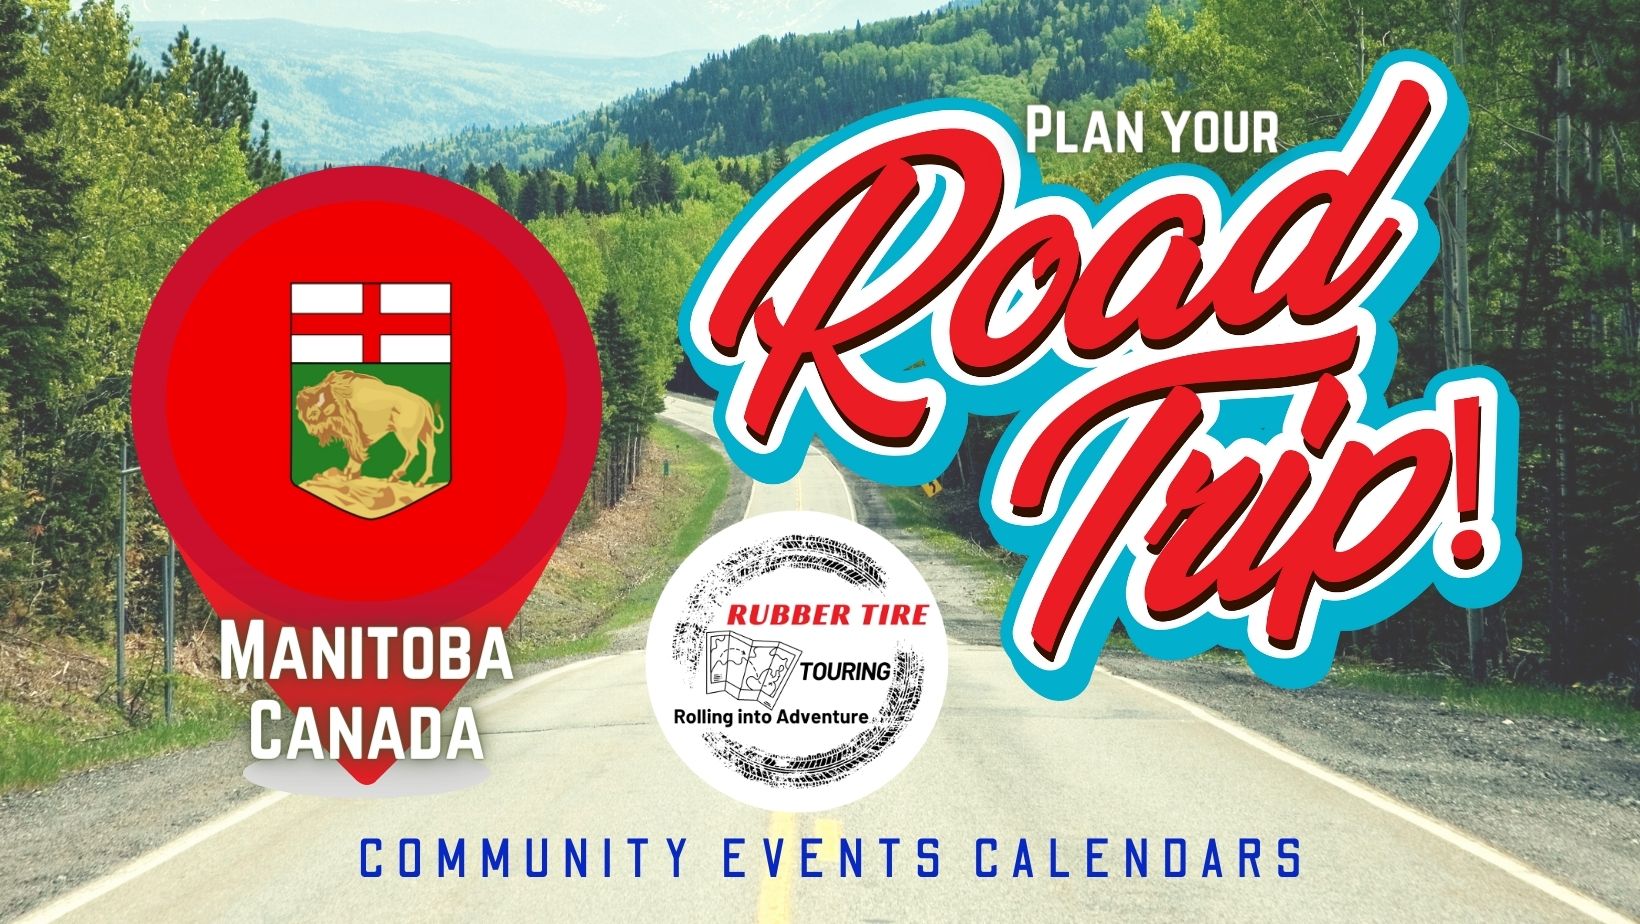 MB Events Calendar - Plan your road trip!